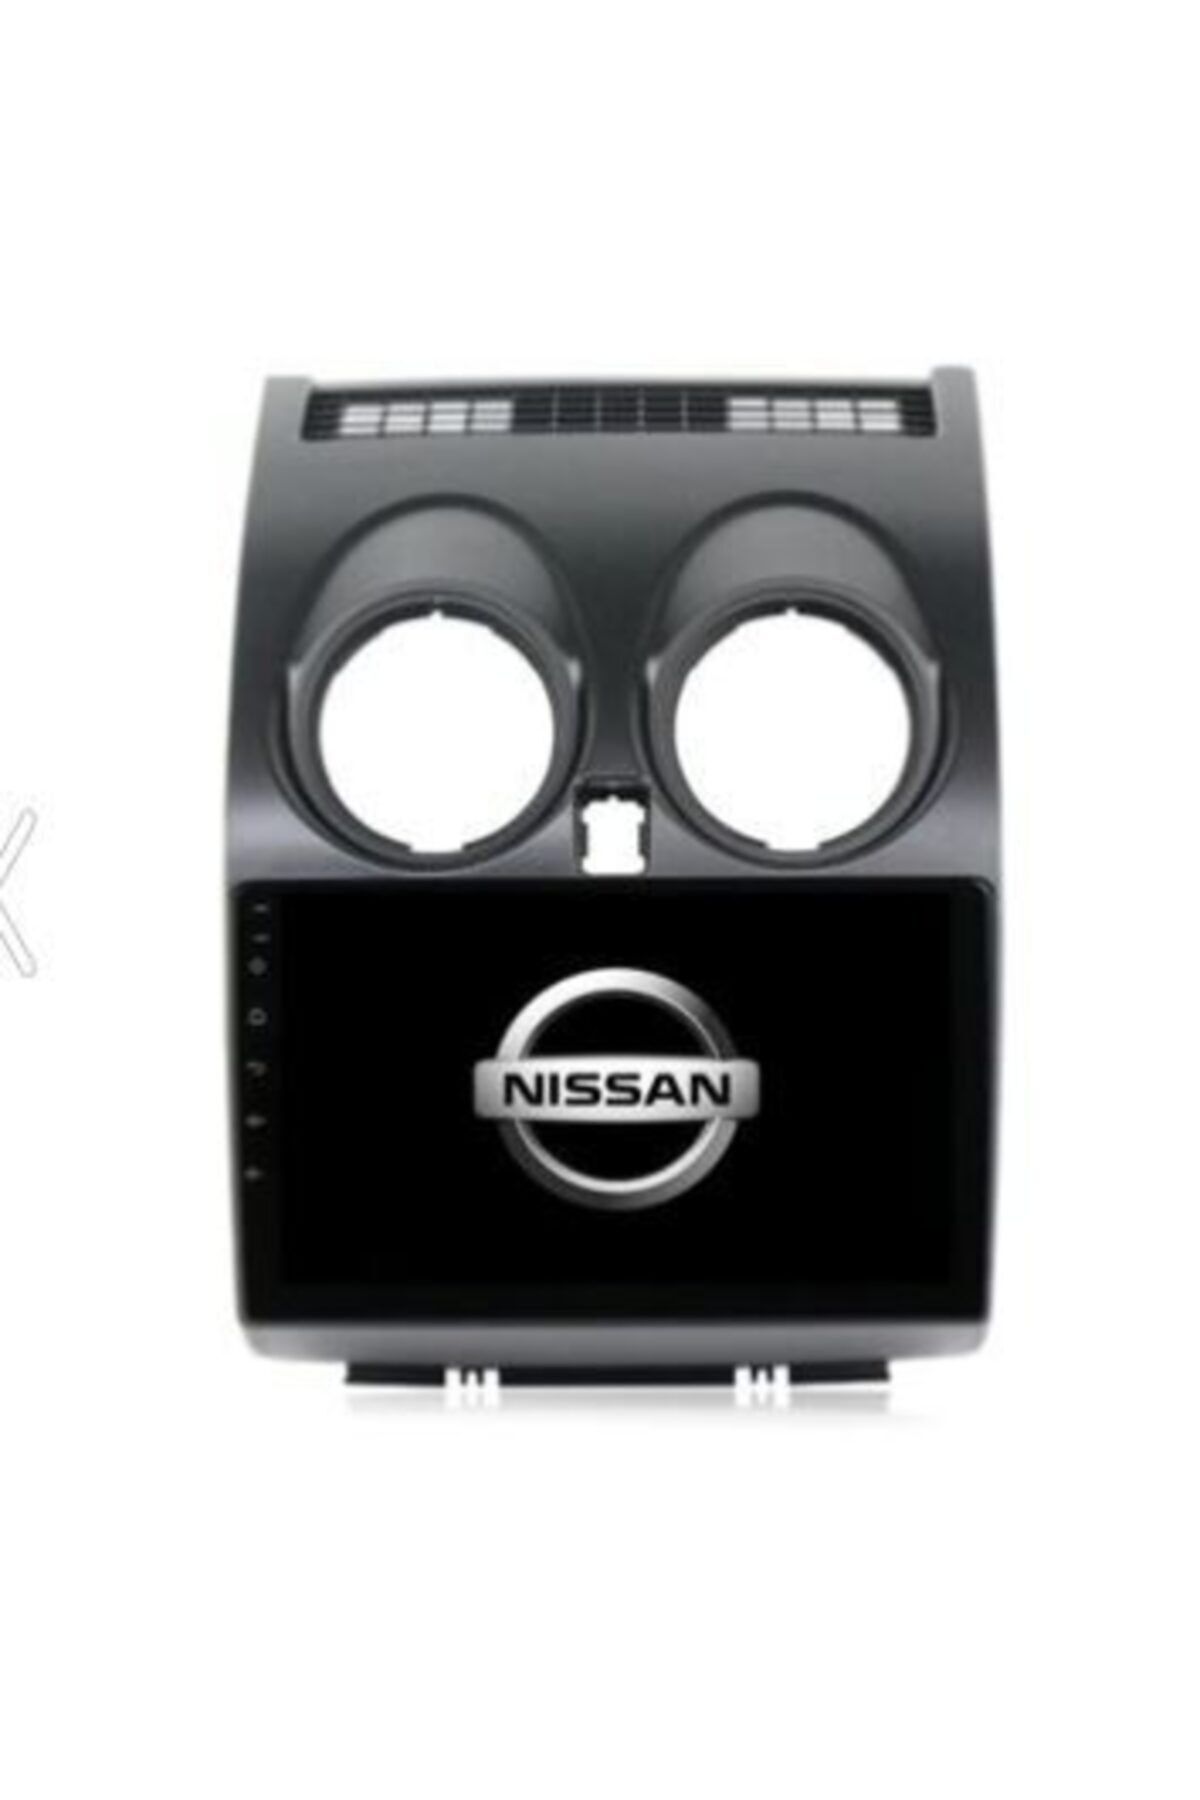 OEM Nissan Qashqai Android Multimedya 2gb Ram 10.0 Sürüm Ips Ekran Kamera